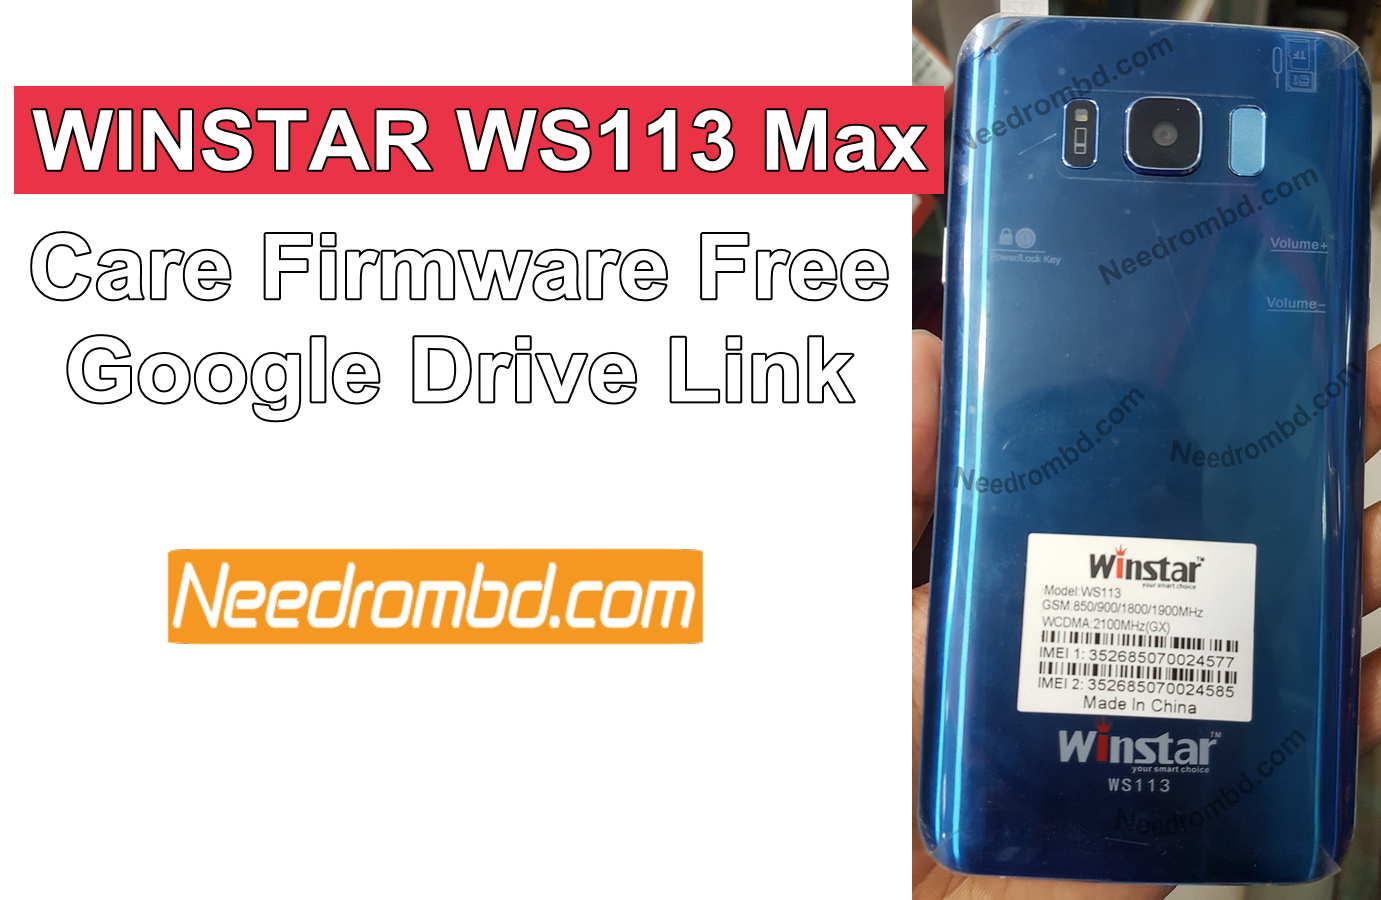 Winstar WS113 Max